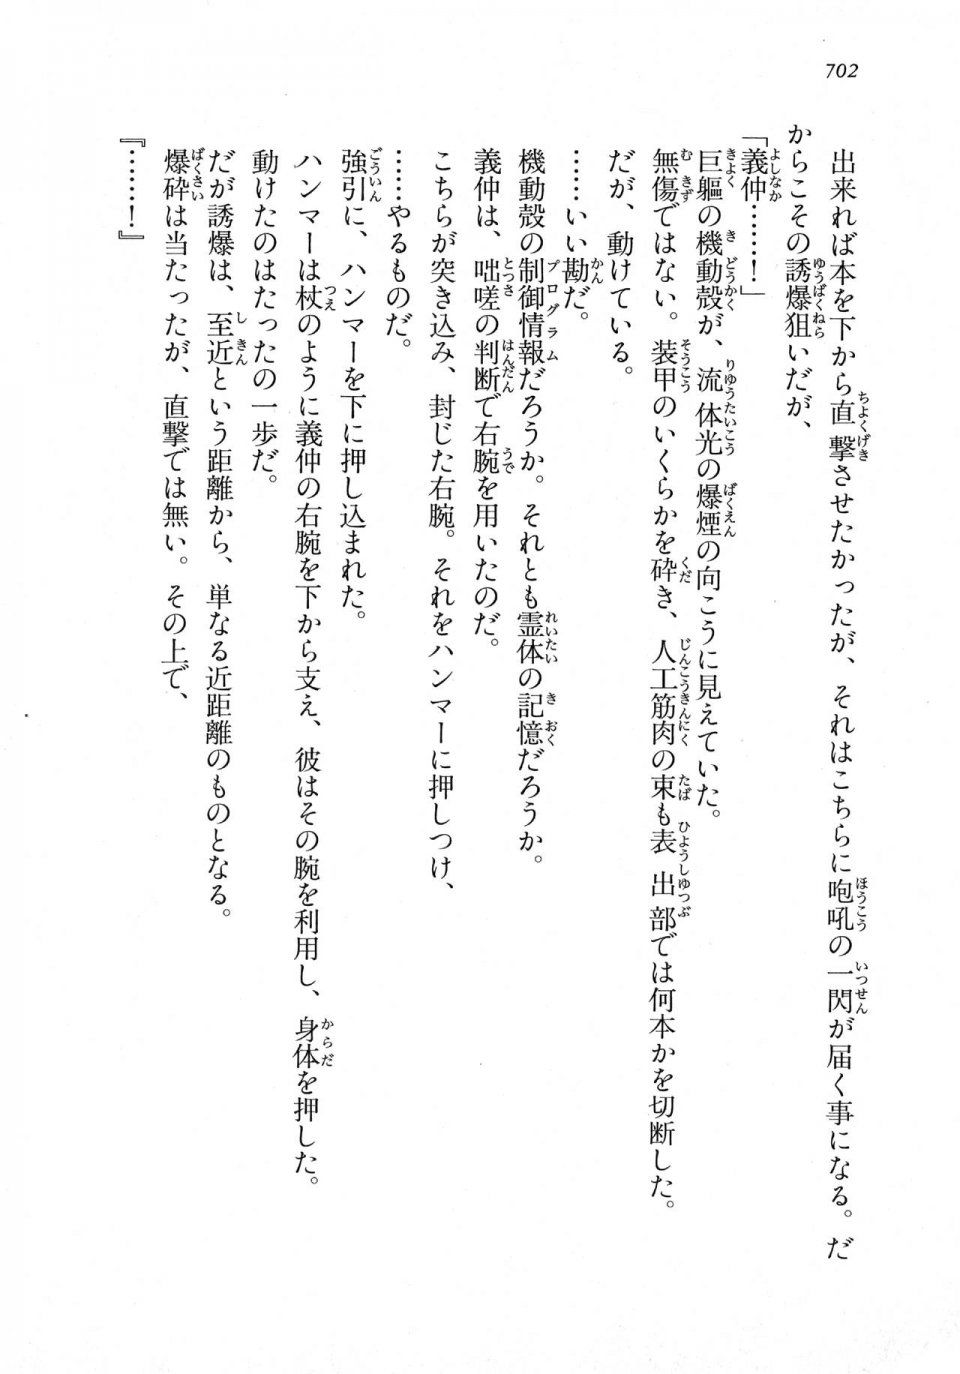 Kyoukai Senjou no Horizon LN Vol 18(7C) Part 2 - Photo #142